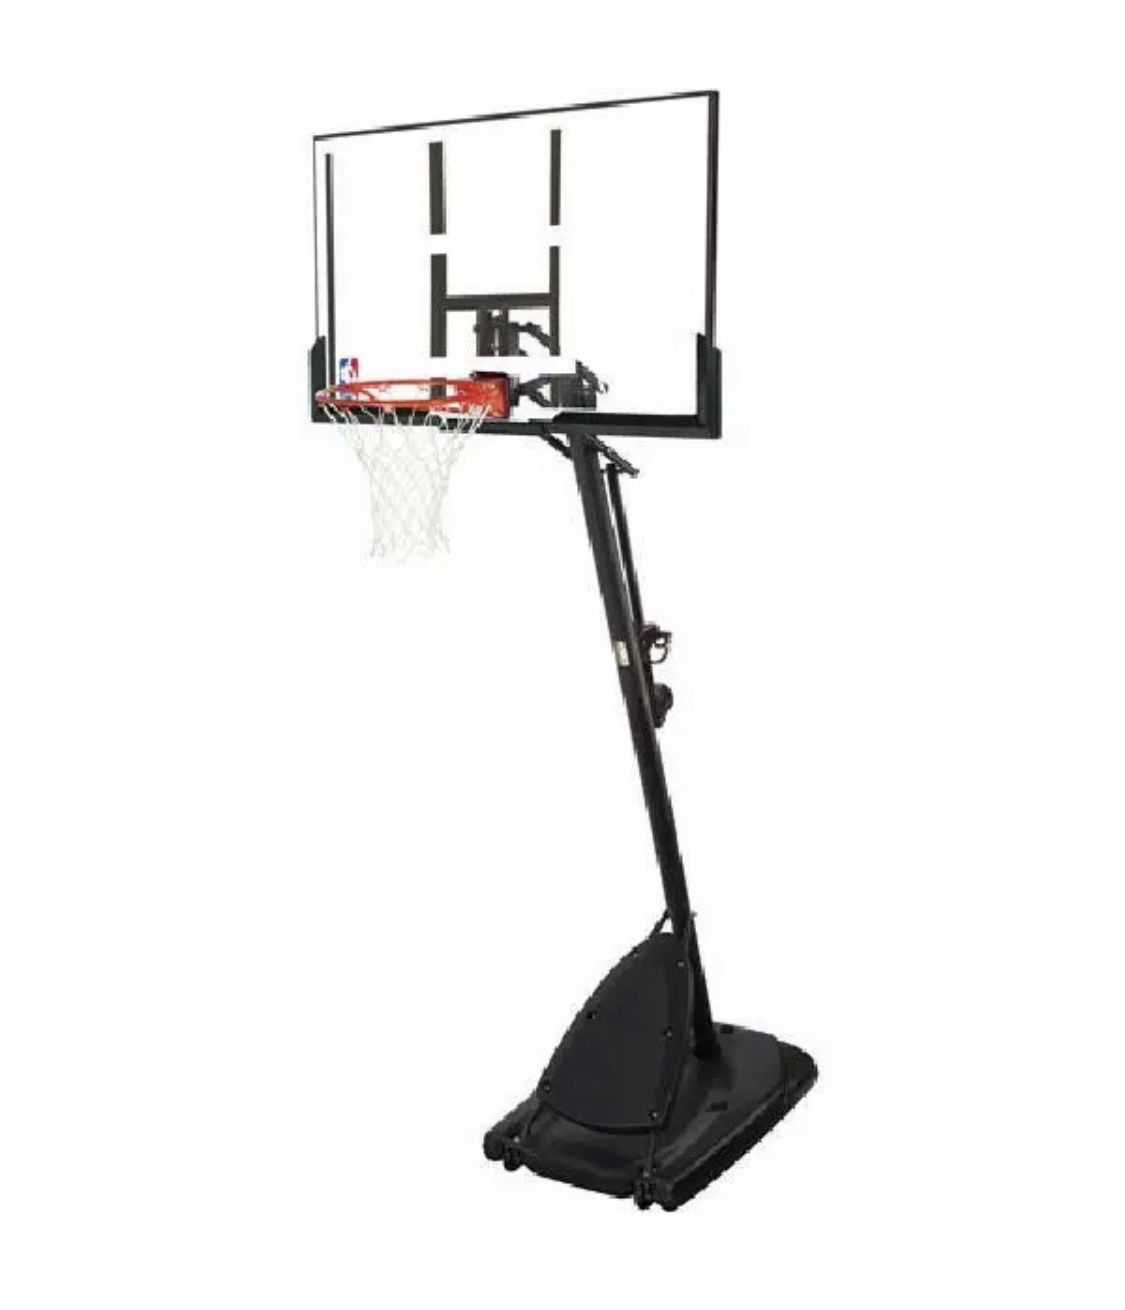 New Official NBA SPALDING 54" Portable Angled Basketball Hoop